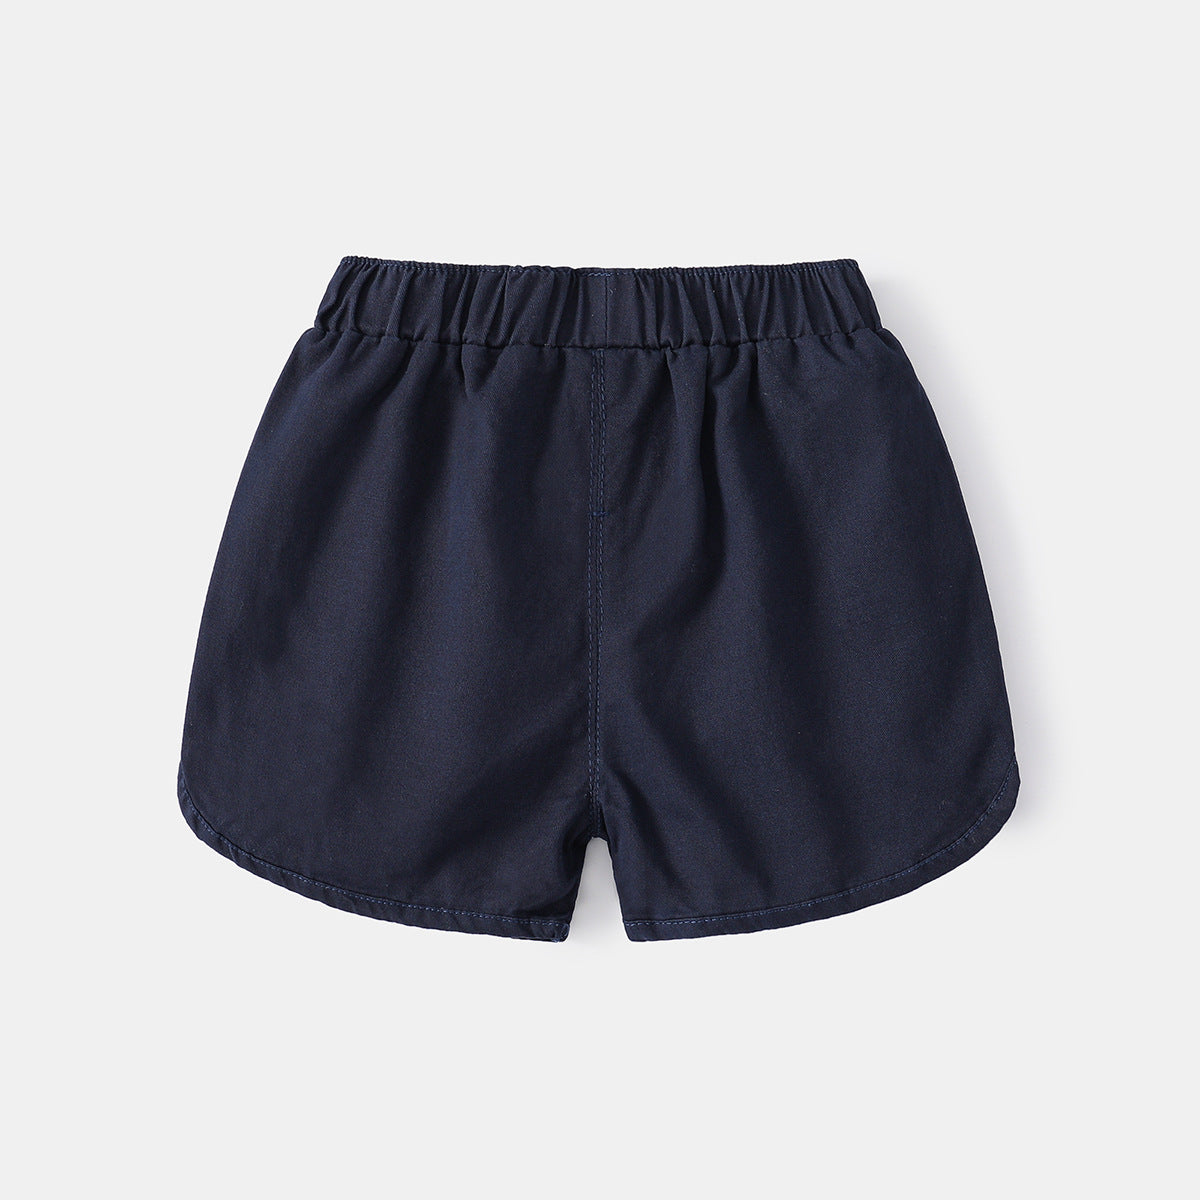 [513625] - Bawahan Celana Pendek Chino Import Anak Cowok - Motif Casual Pockets